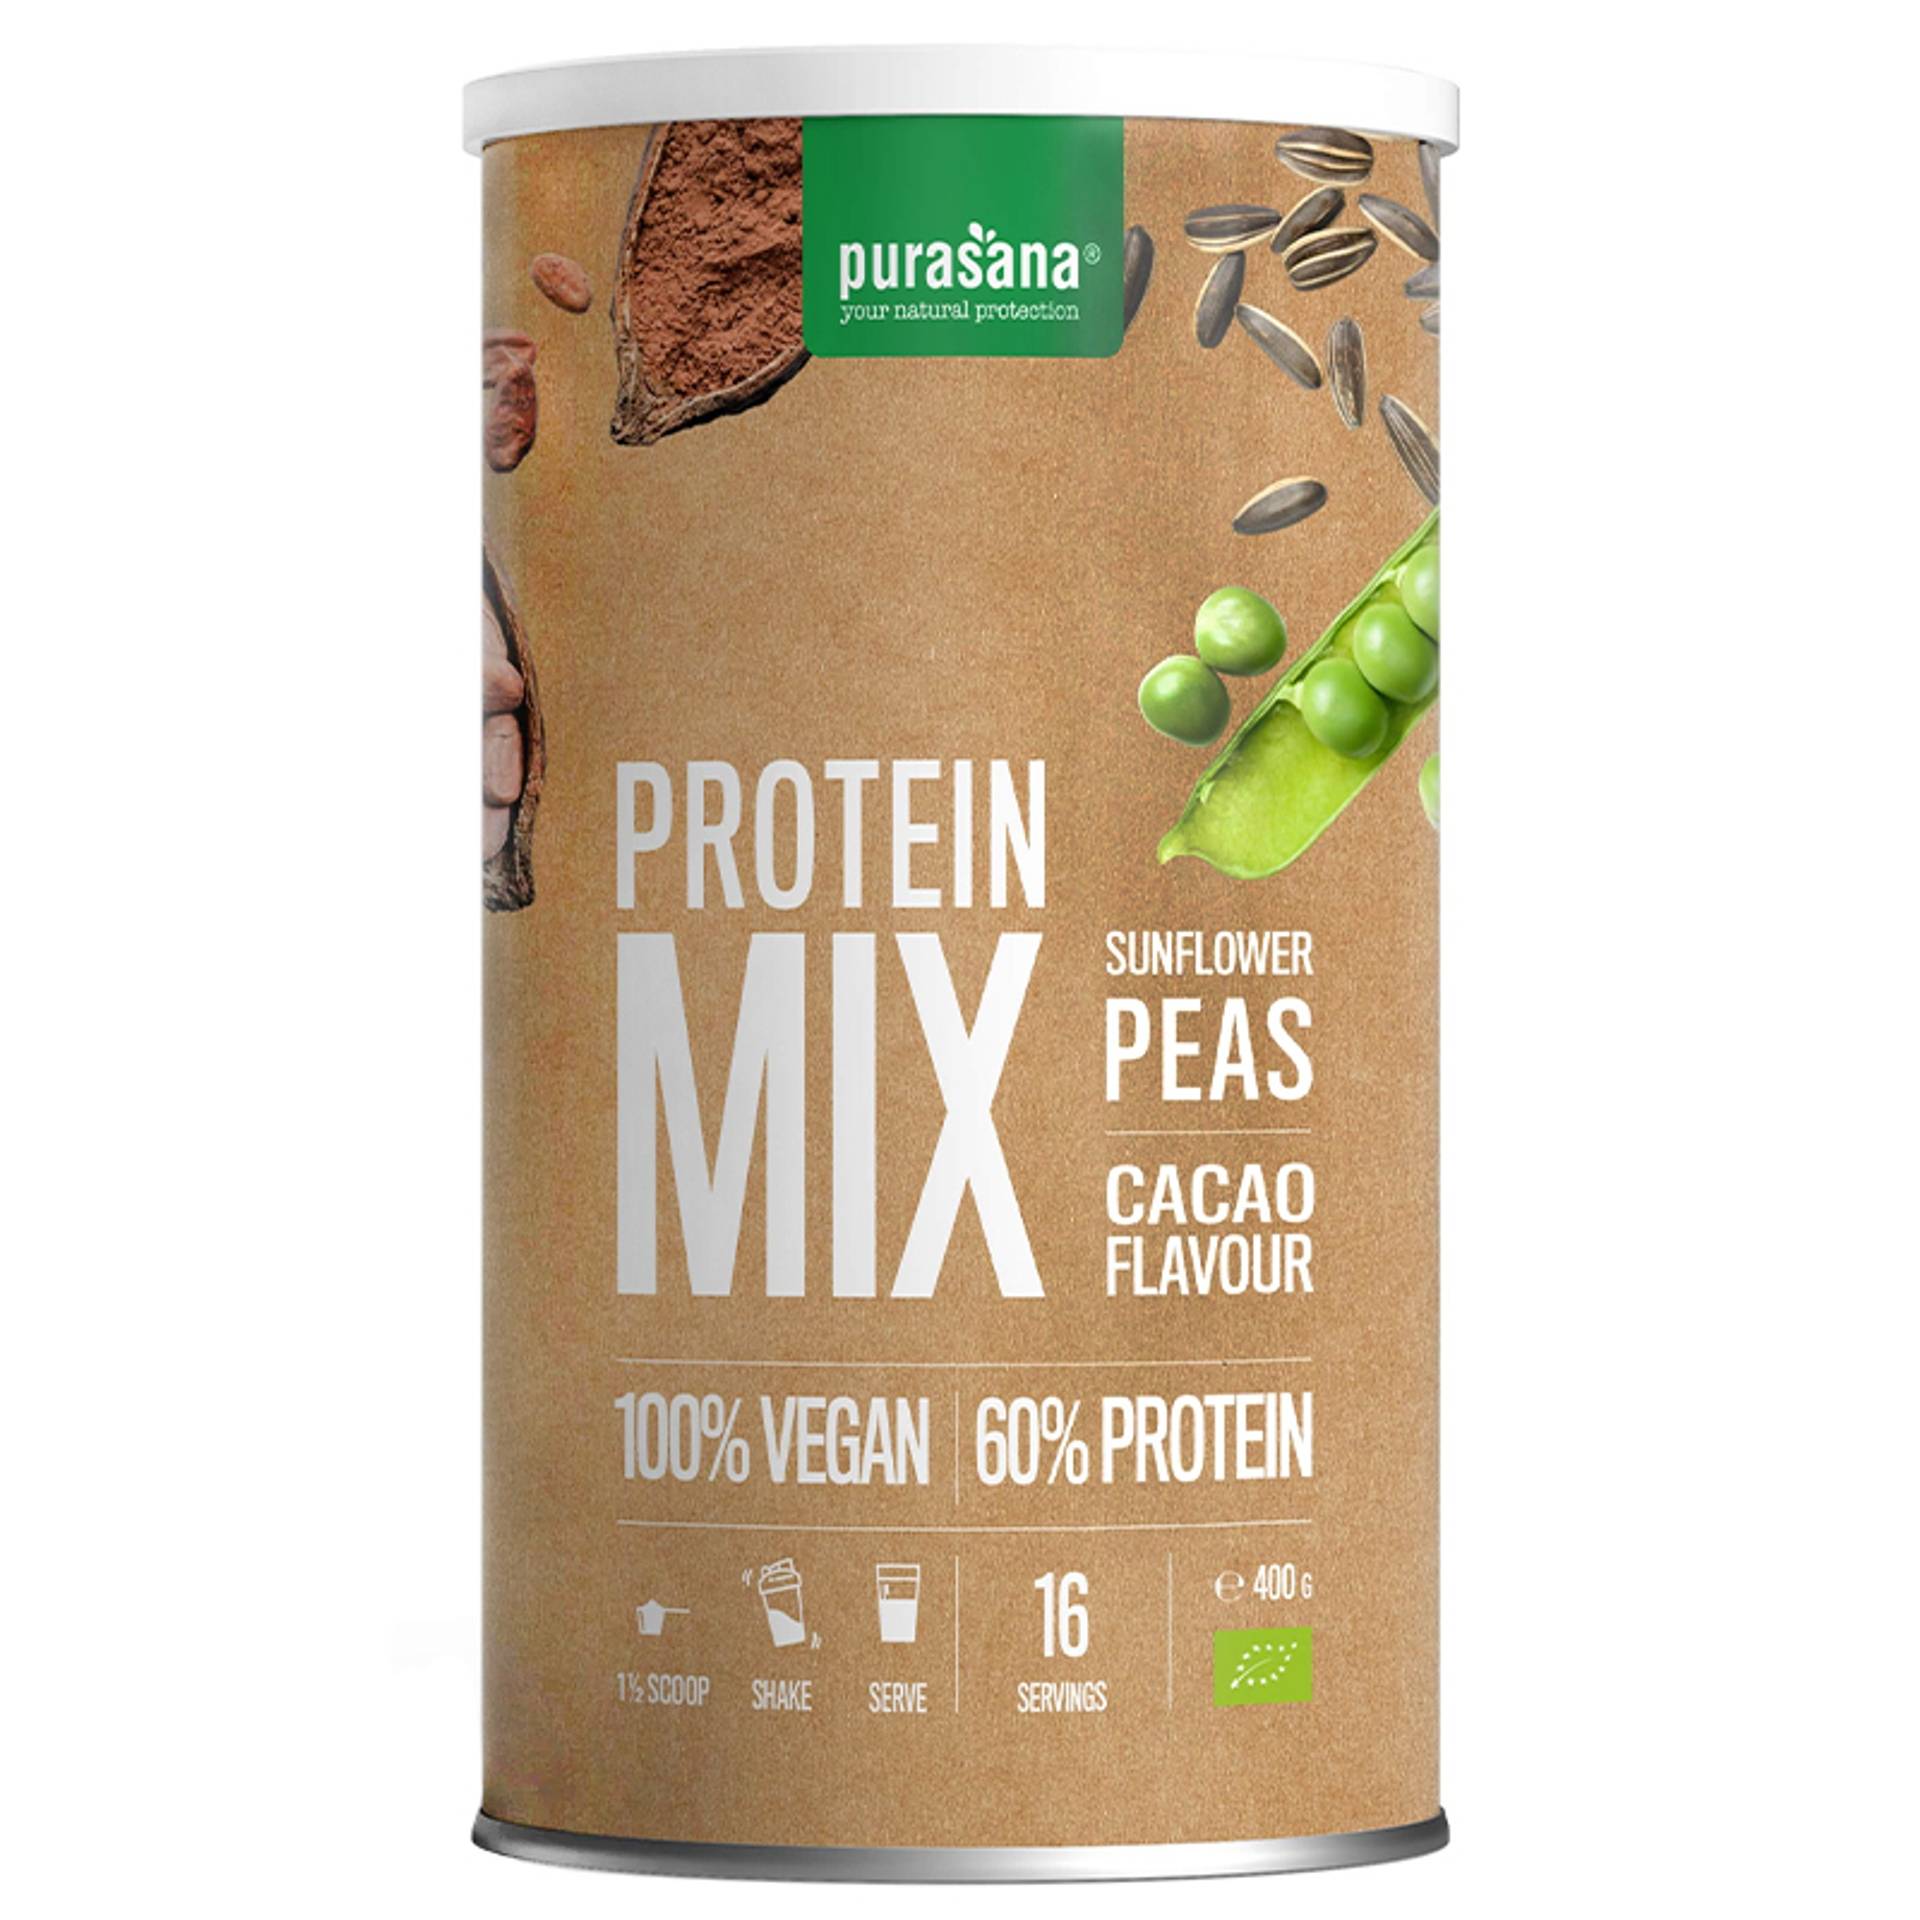 Purasana_Vegan-protein-pea-sunflower-cacao-400g_800x800px.jpg